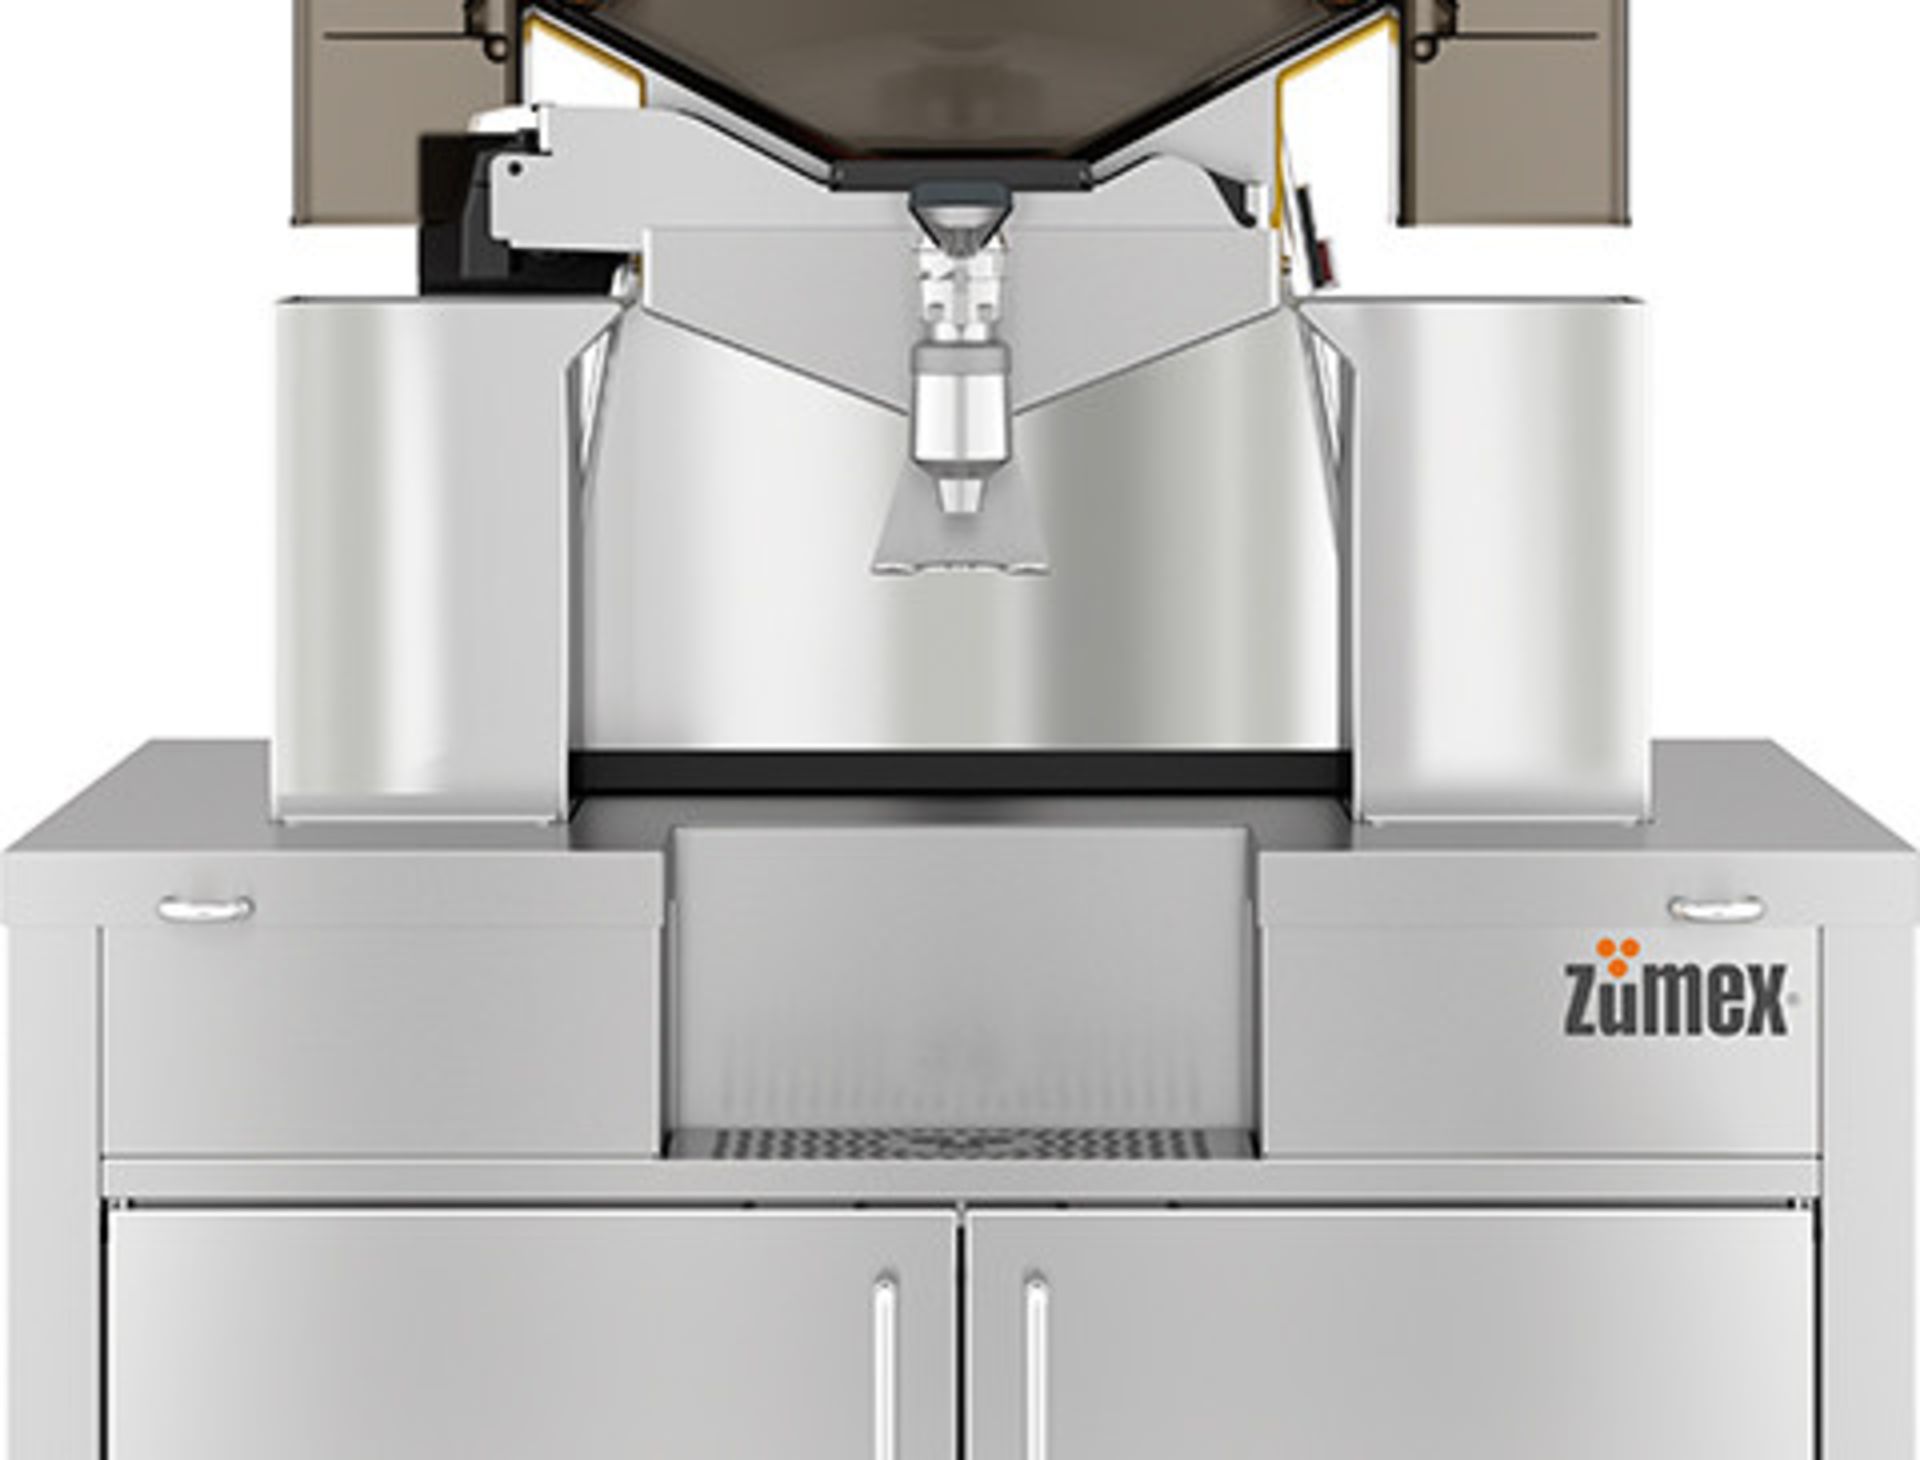 1 x Zumex Speed S +Plus Self-Service Podium Commercial Citrus Juicer - Manufactured in 2018 - - Image 9 of 21